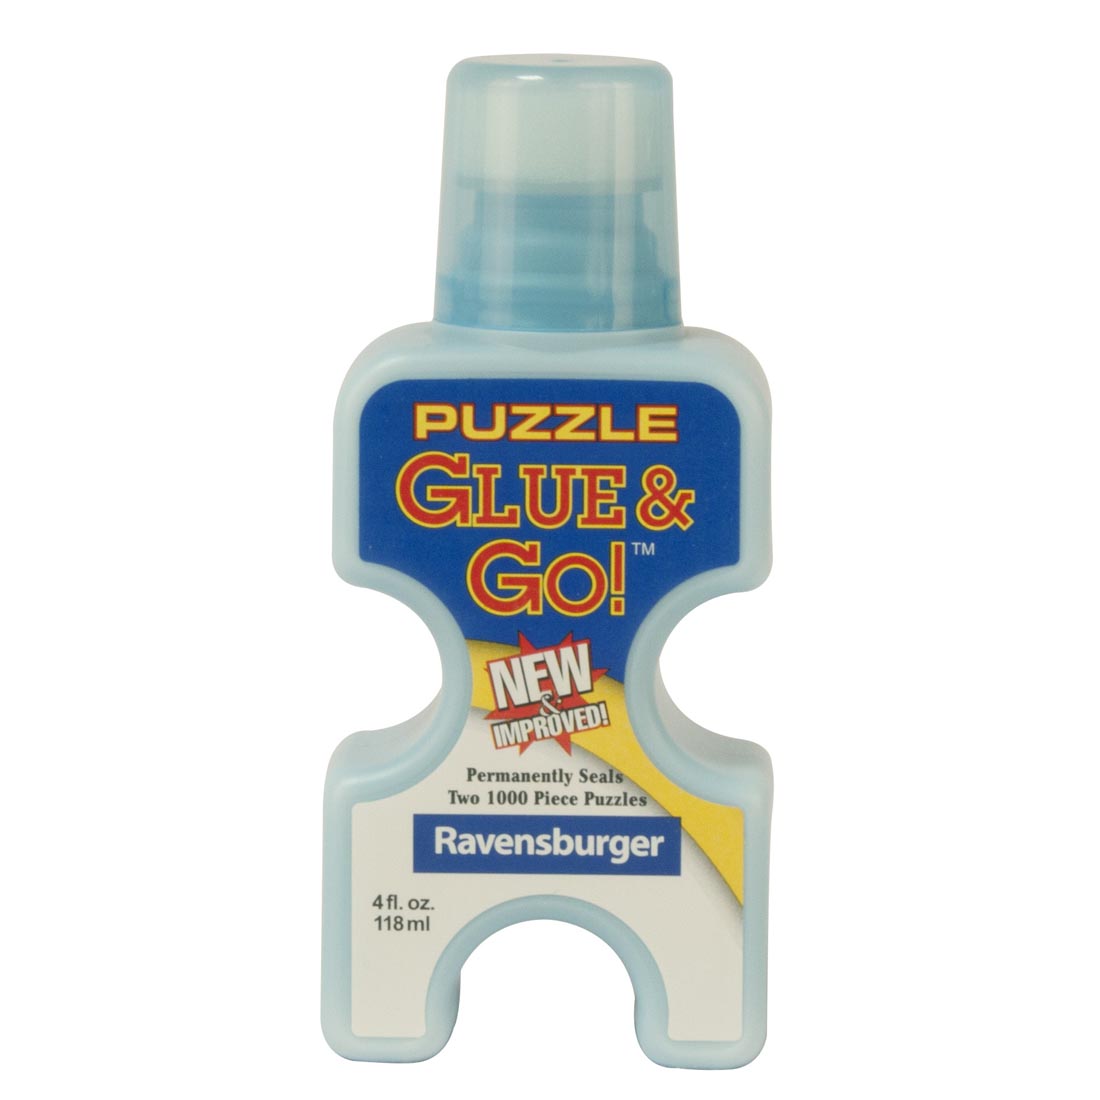 Bottle of Puzzle Glue & Go!